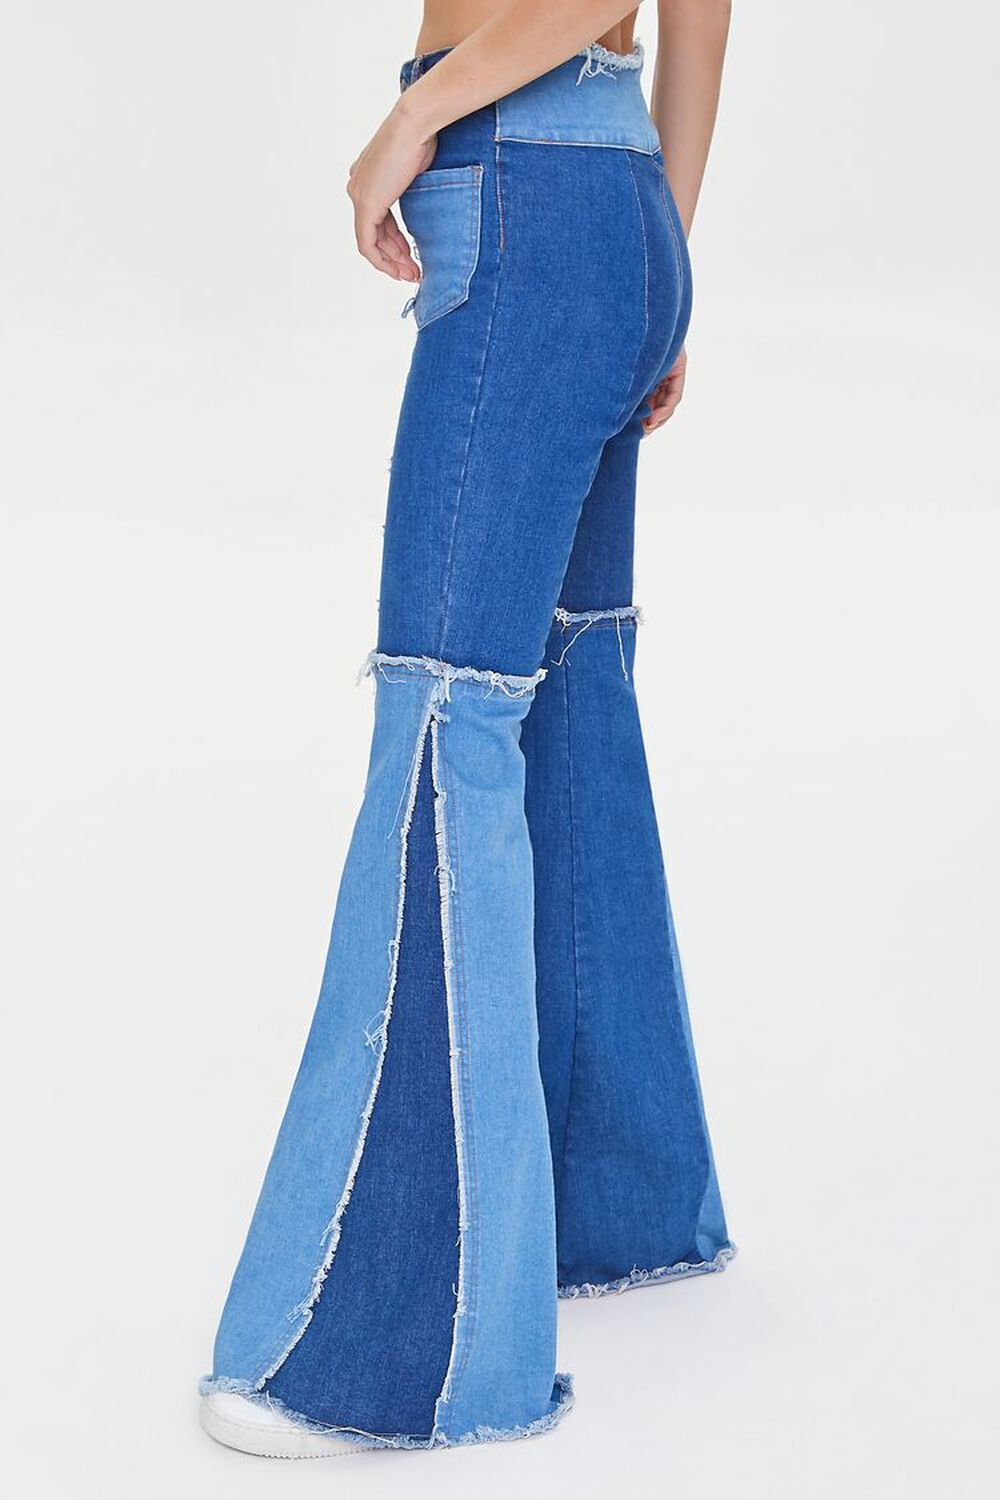 DENIM/MULTI Patchwork Frayed Flare Jeans, image 3